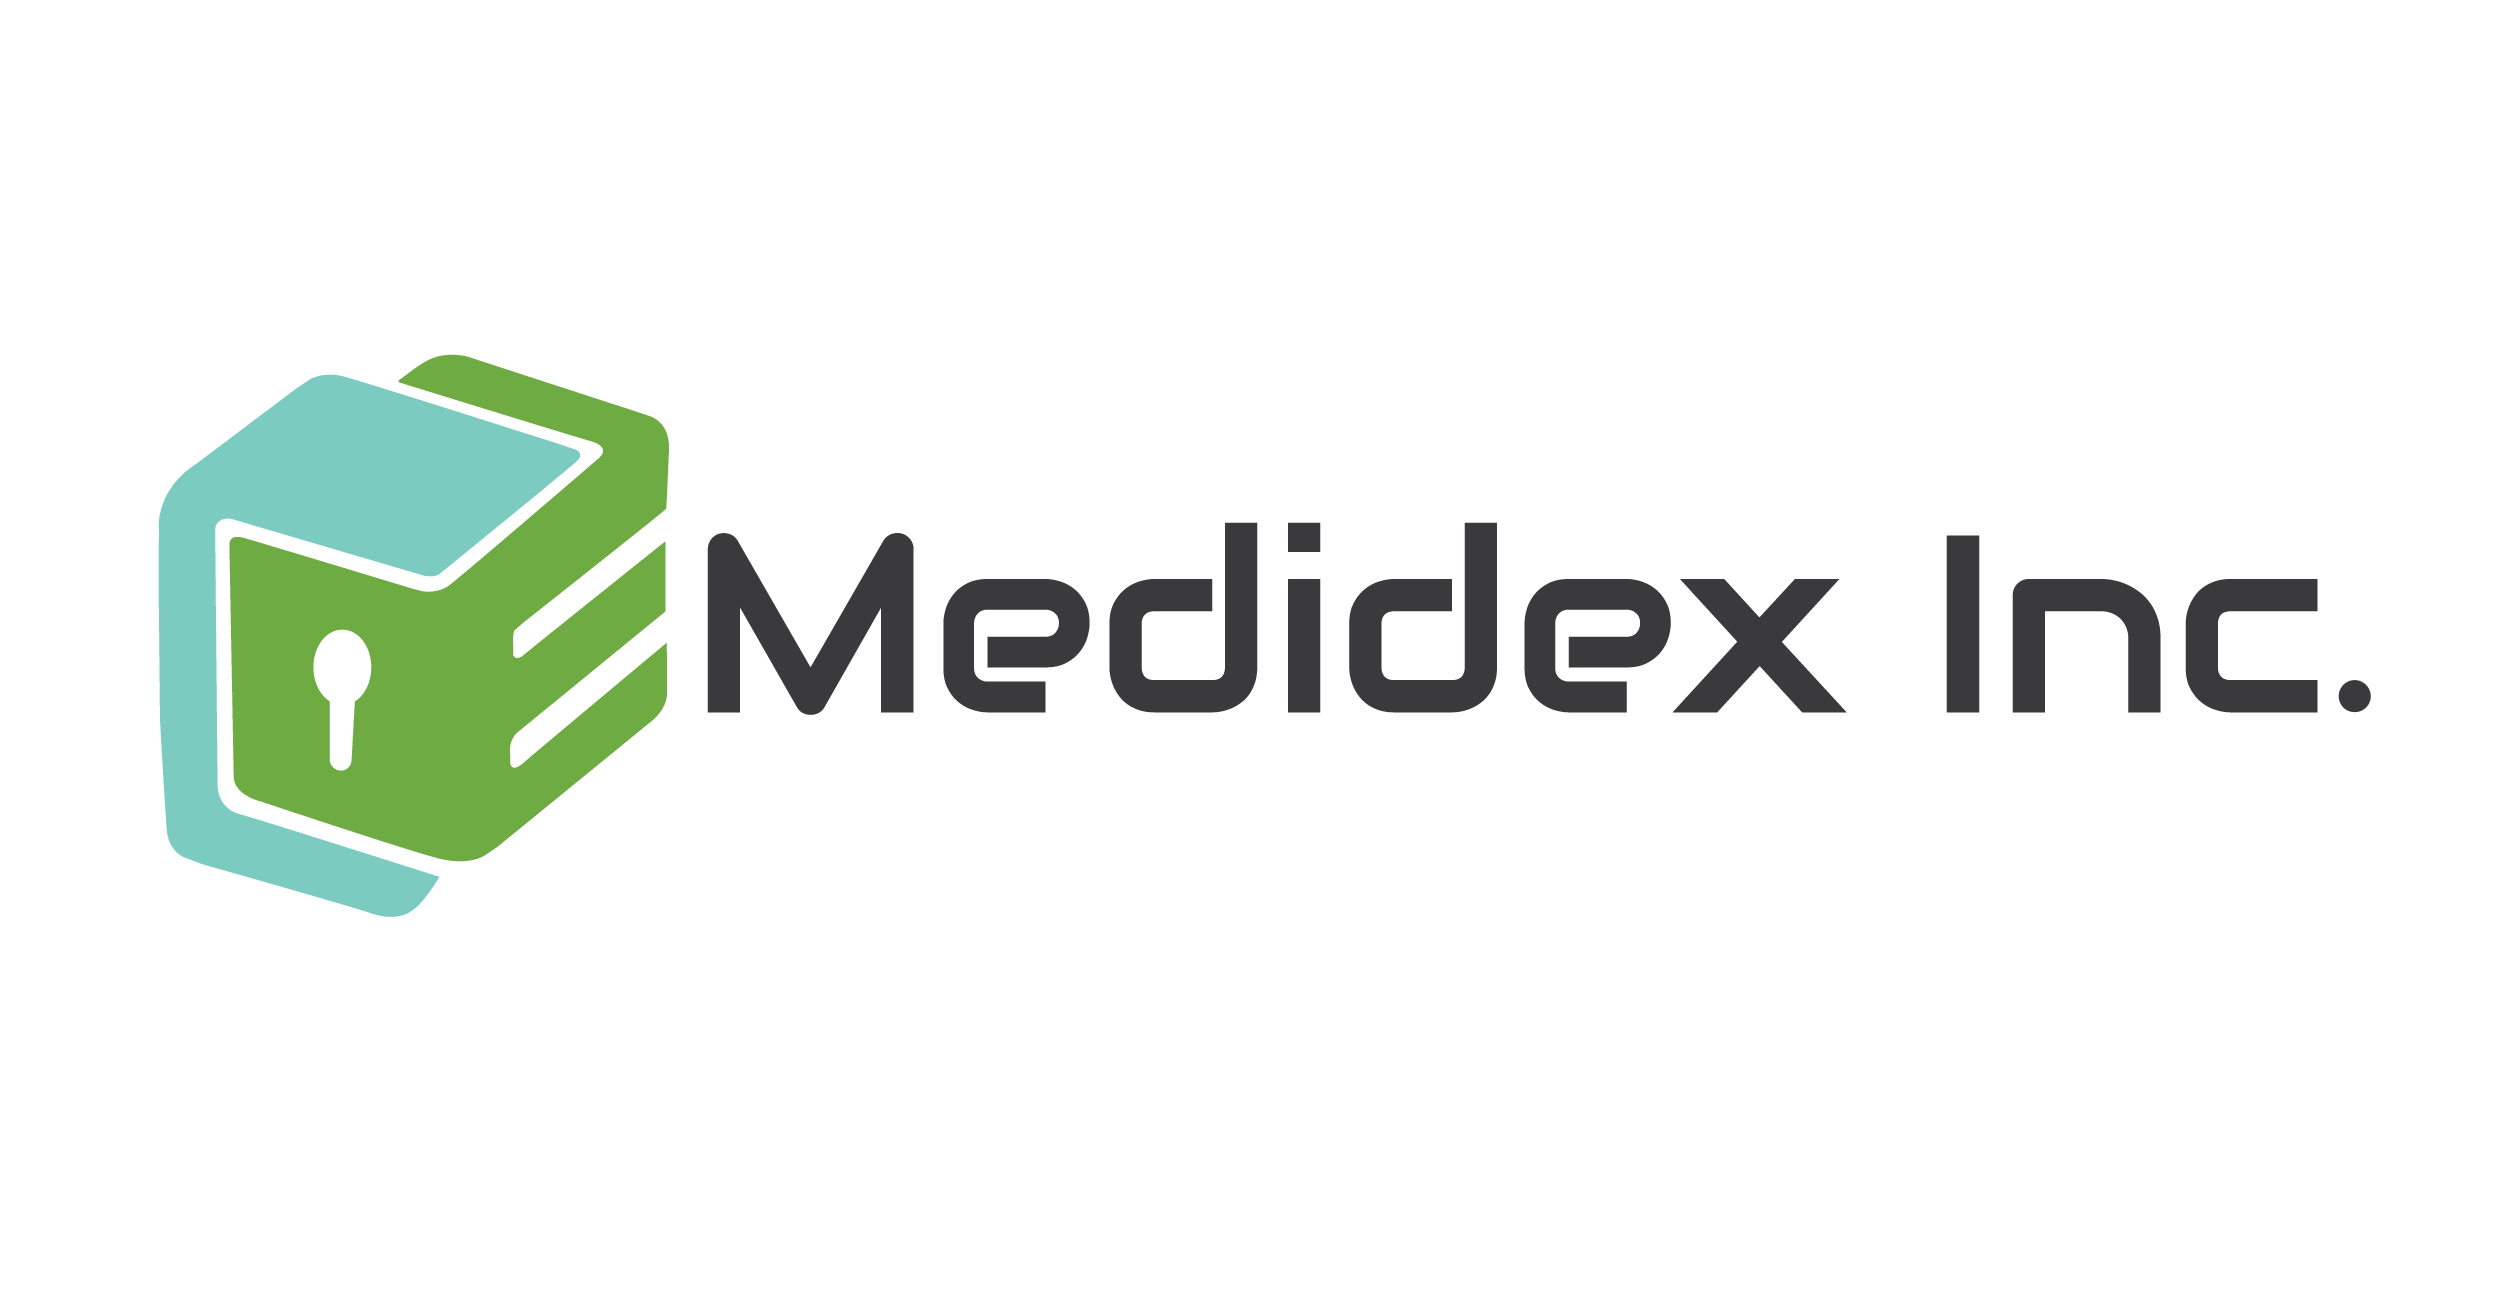 medidex Logo